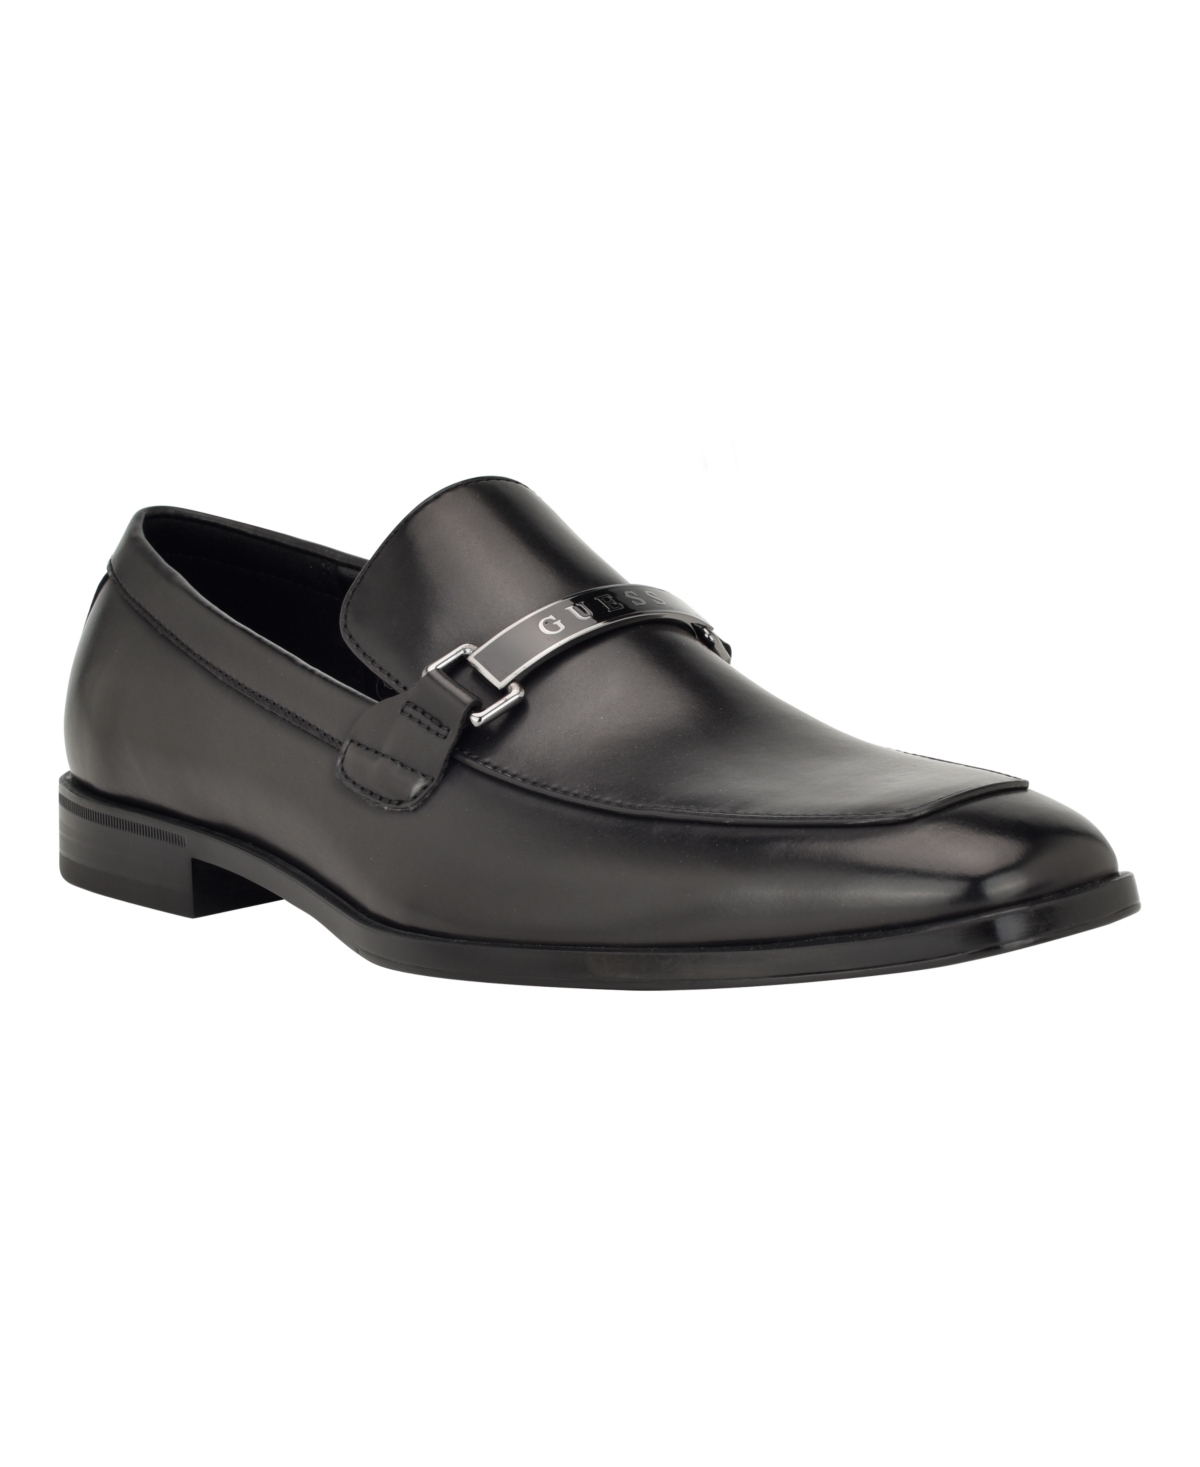 Men's Hisoko Square Toe Slip On Dress Loafers - Black